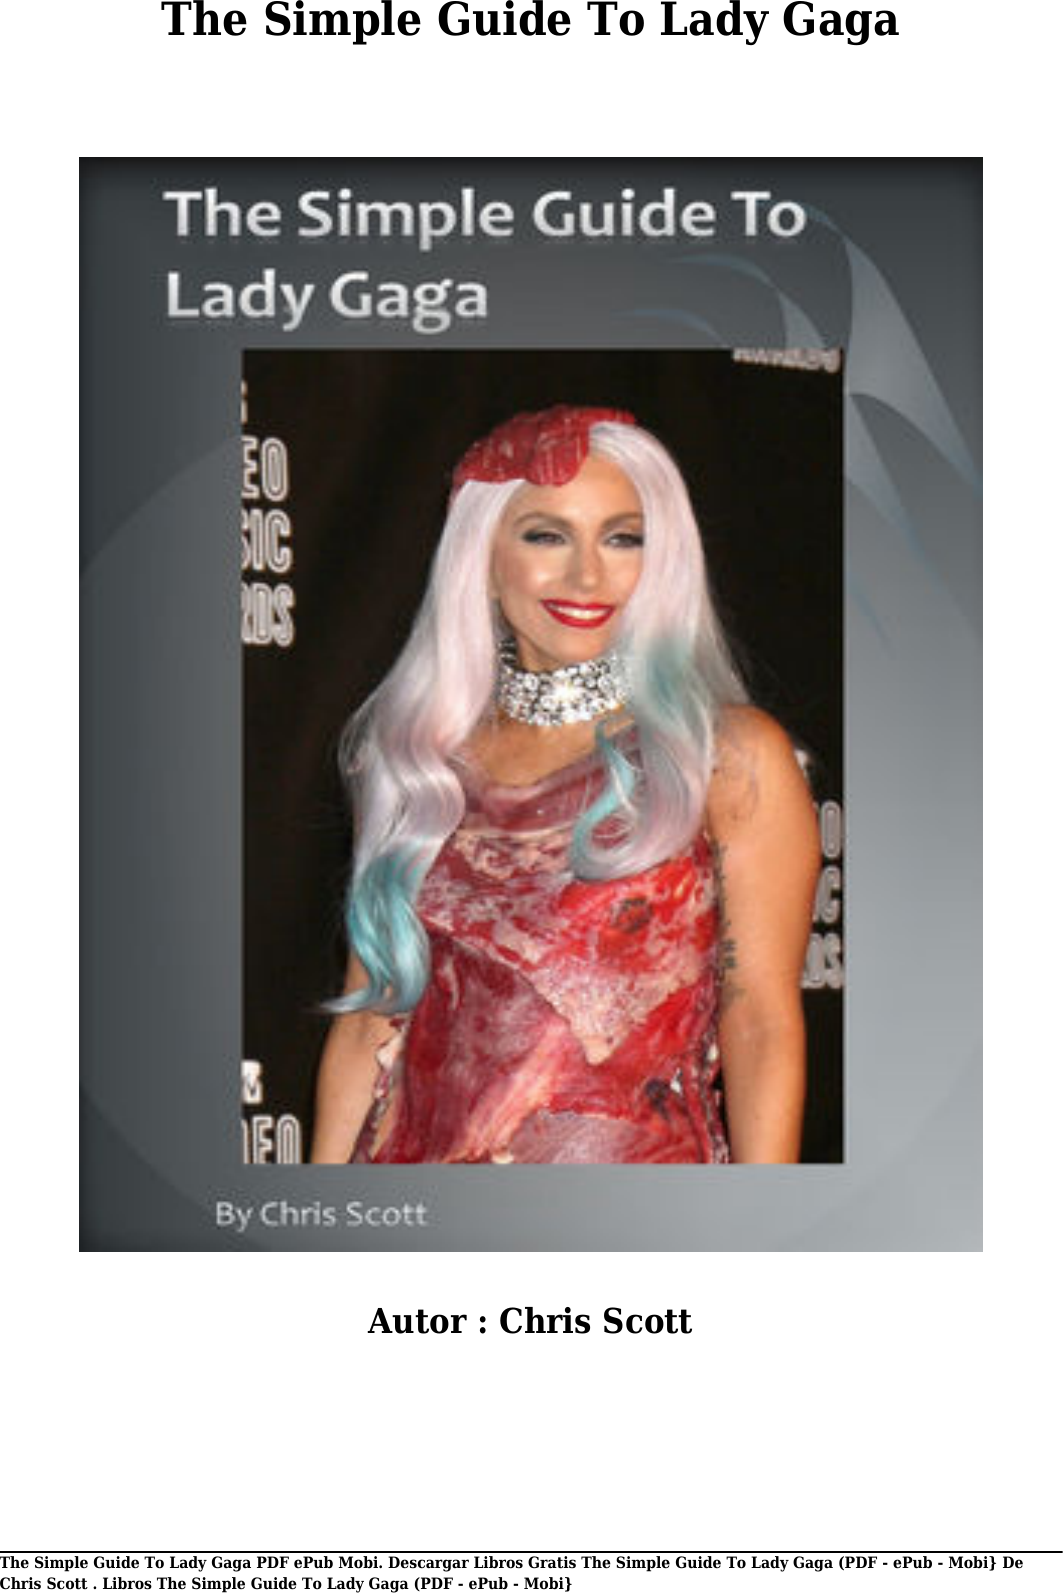 Page 1 of 10 - Descargar Libro Gratis The Simple Guide To Lady Gaga AUTHORT Chris Scott(PDF - EPub Mobi} Libros (PDF E Pub De Scott